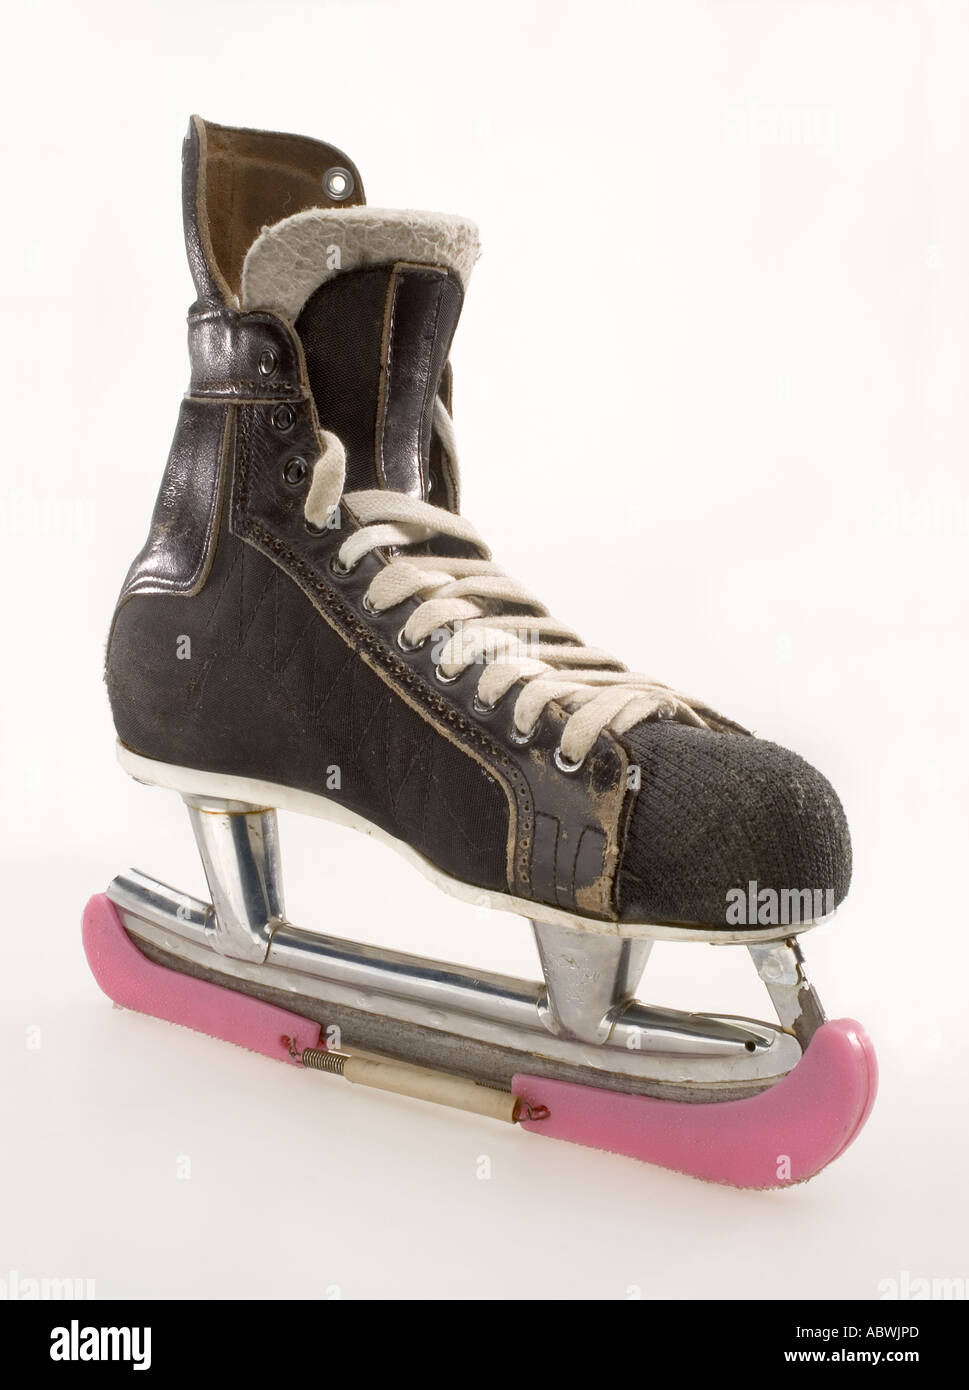 Retro Style Ice Skate Stock Photo